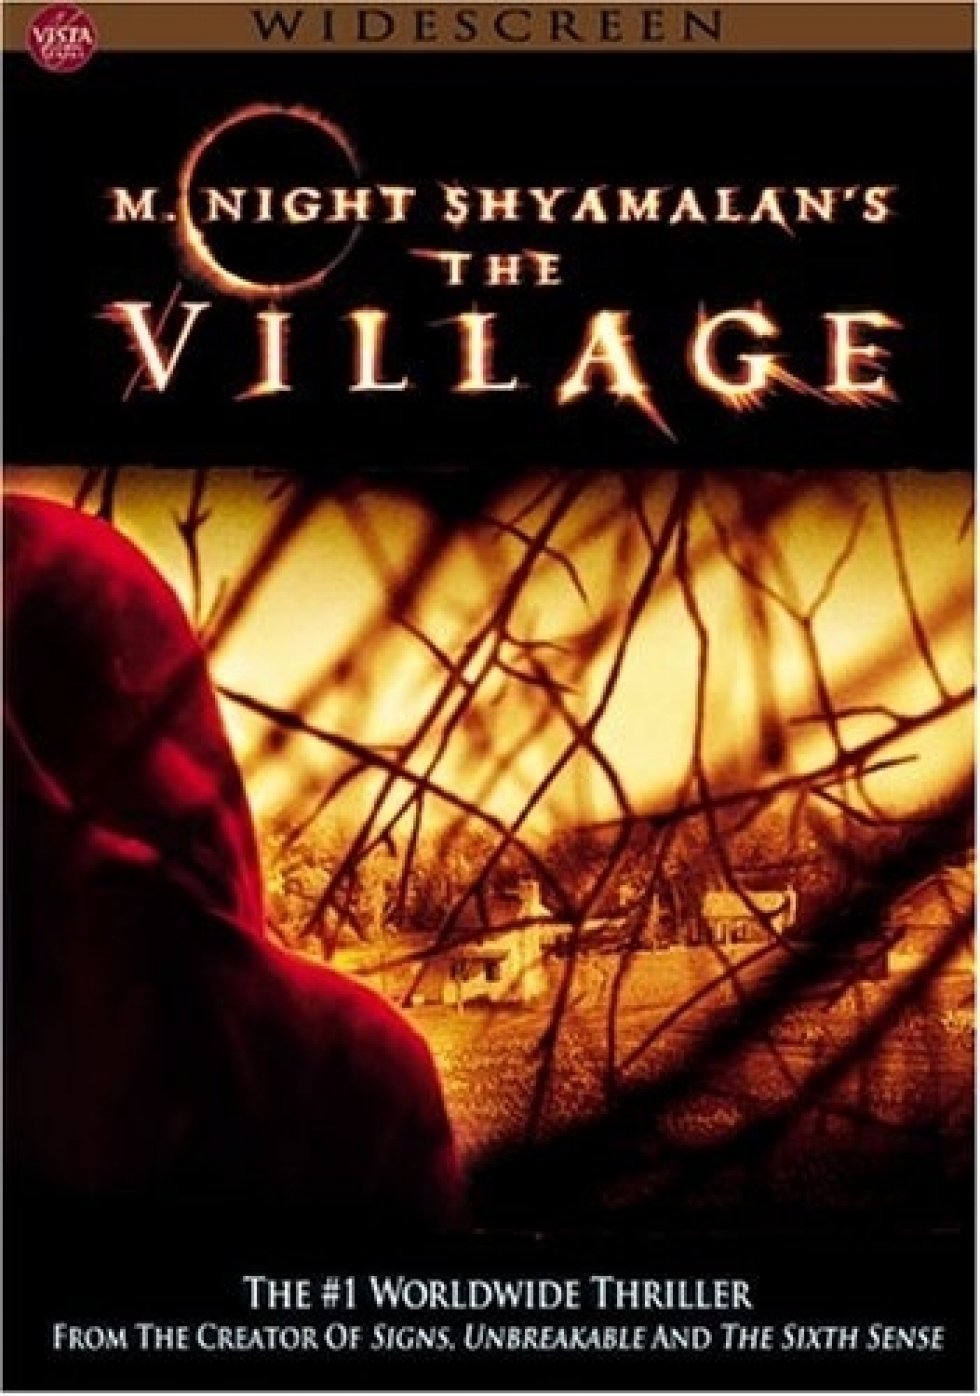 The Village - Warner Bros - M. Night Shyamalan